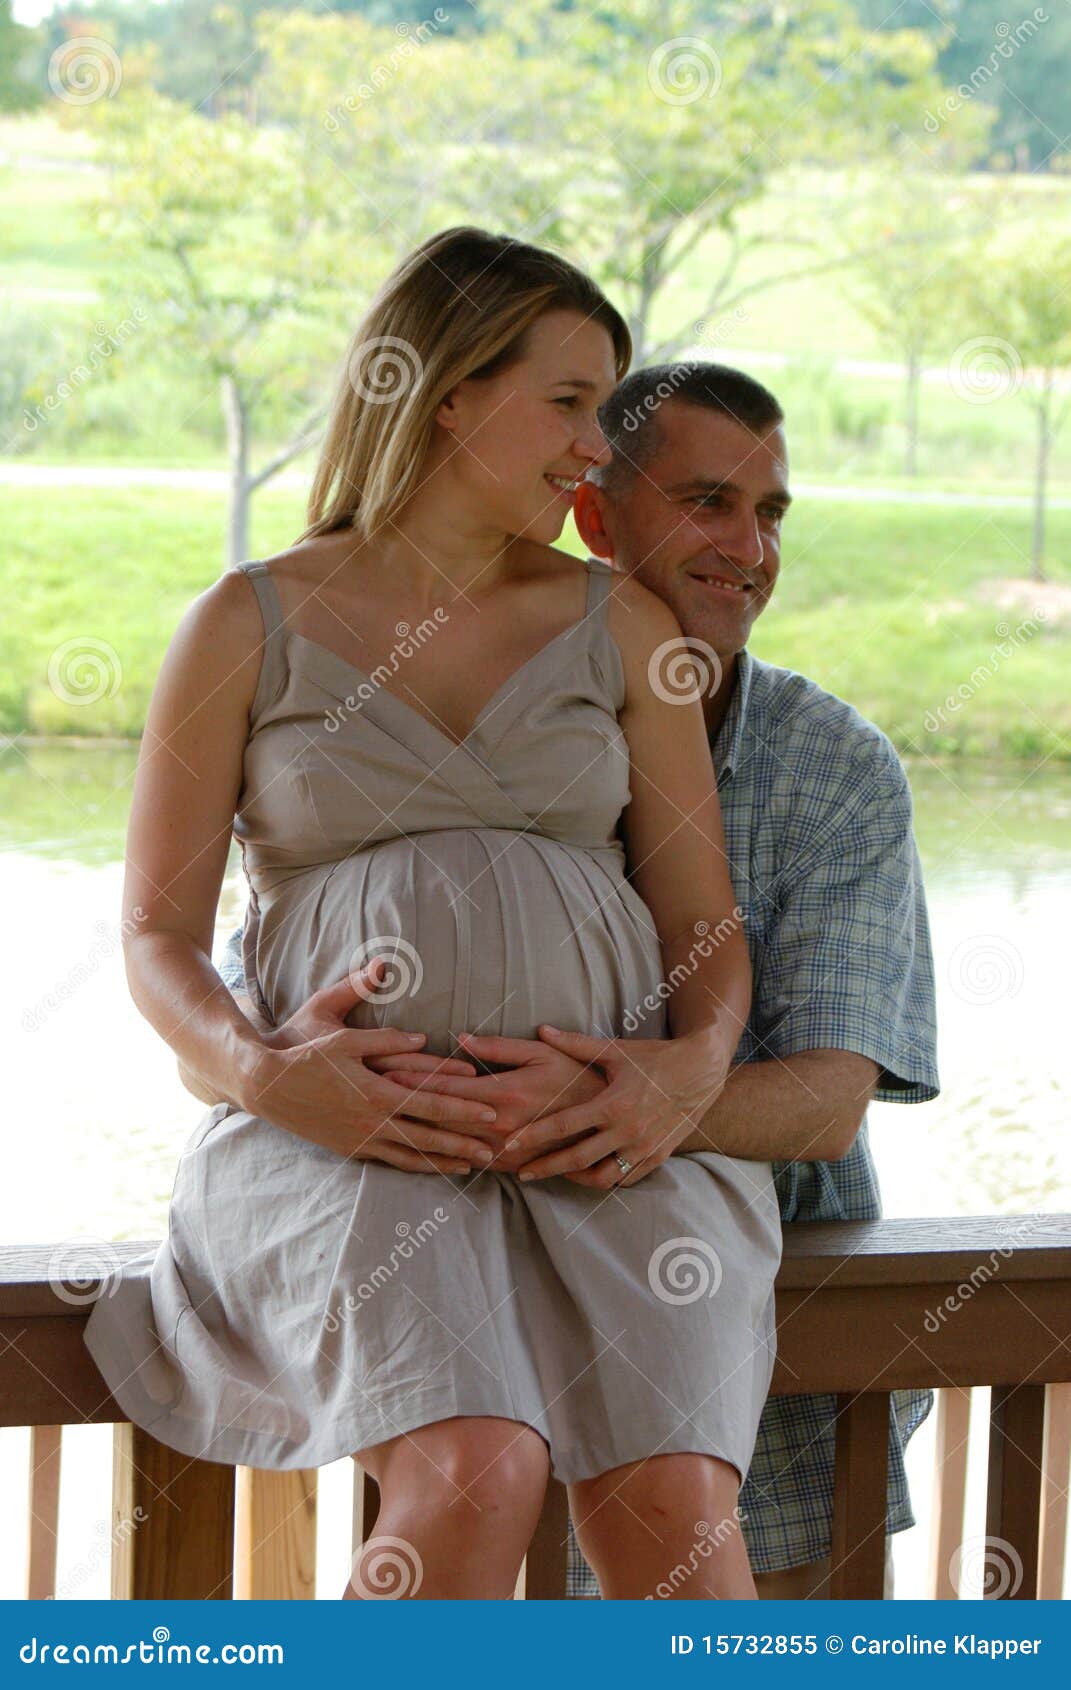 https://thumbs.dreamstime.com/z/happy-pregnant-couple-15732855.jpg